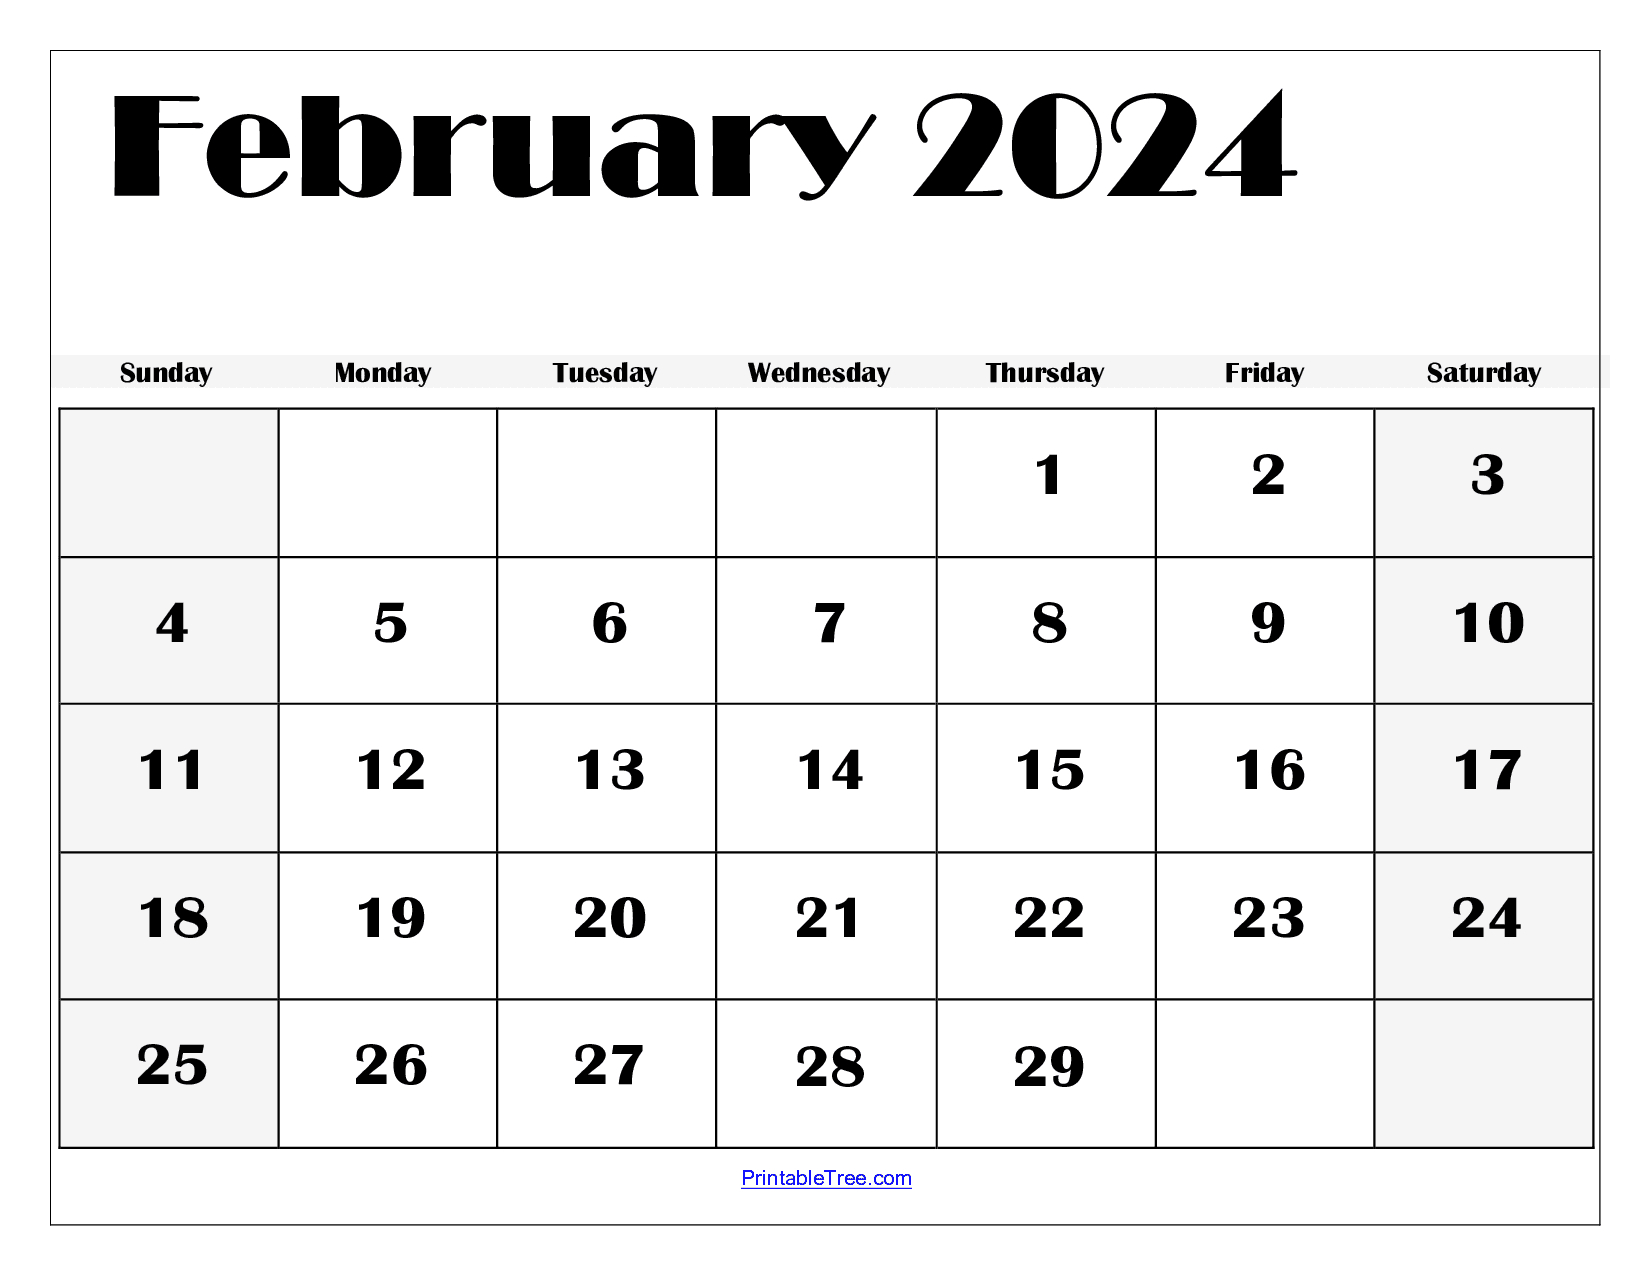 February 2024 Calendar Printable Pdf Template With Holidays | Printable Calendar 2024 February Month